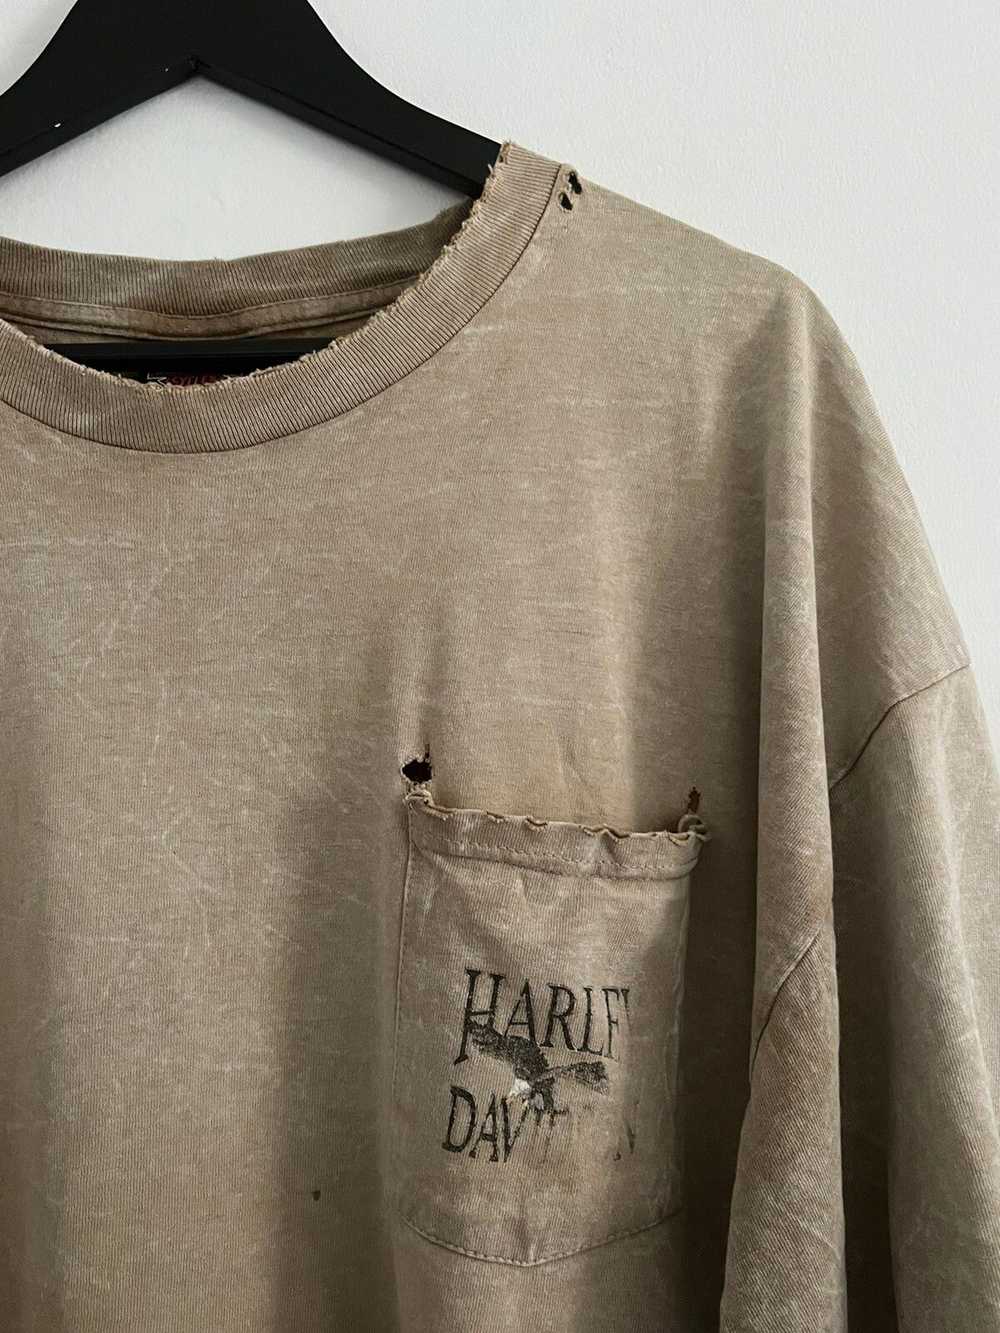 Band Tees × Streetwear × Vintage HARLEY DAVIDSON … - image 9